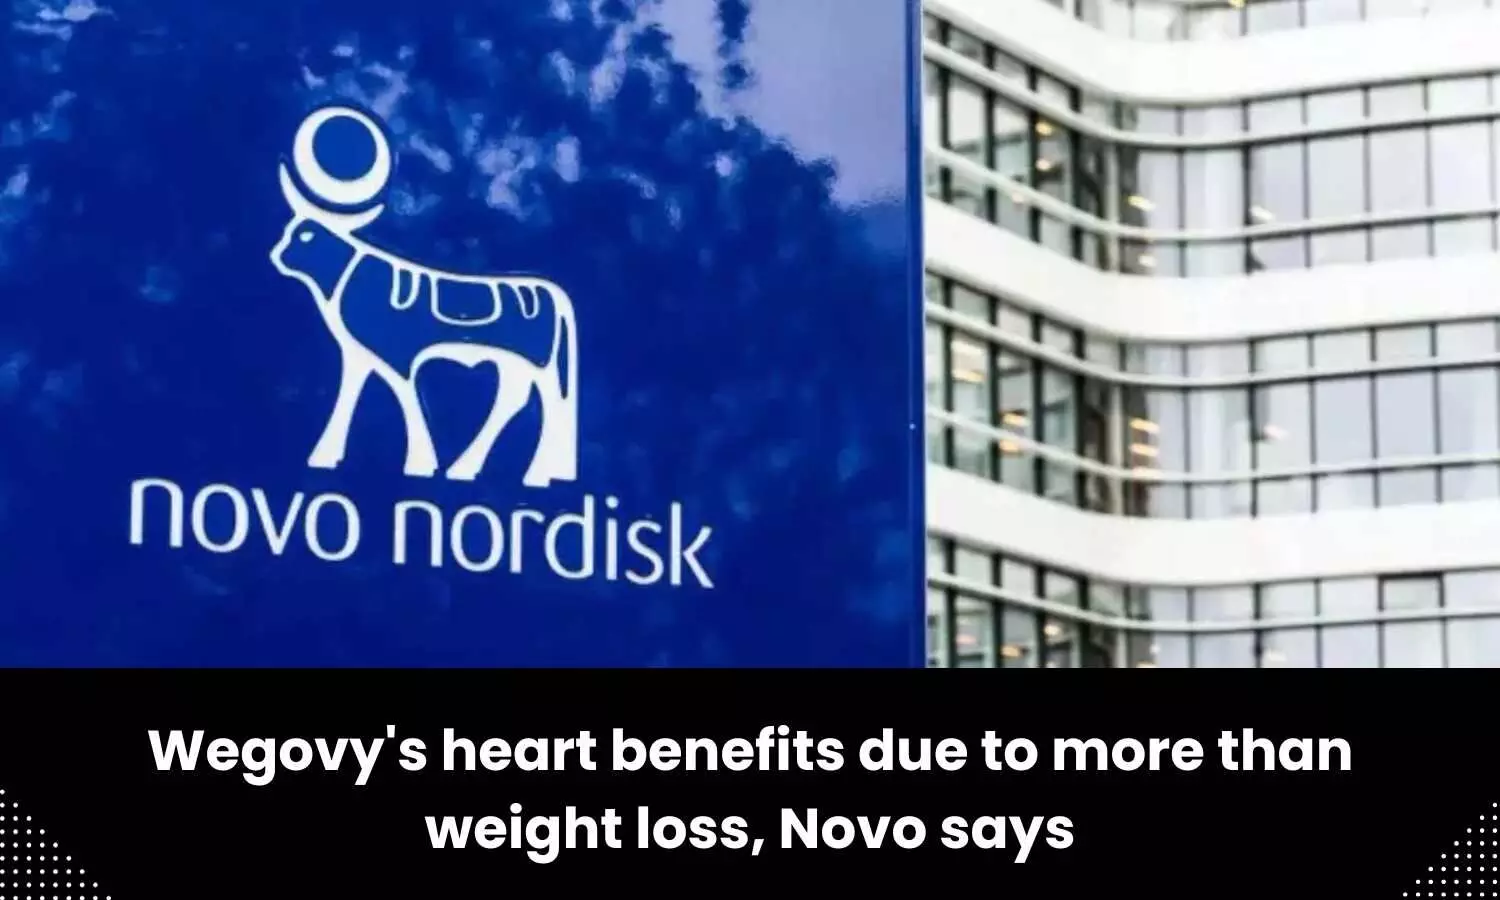 Wegovys heart benefits due to more than weight loss: Novo Nordisk